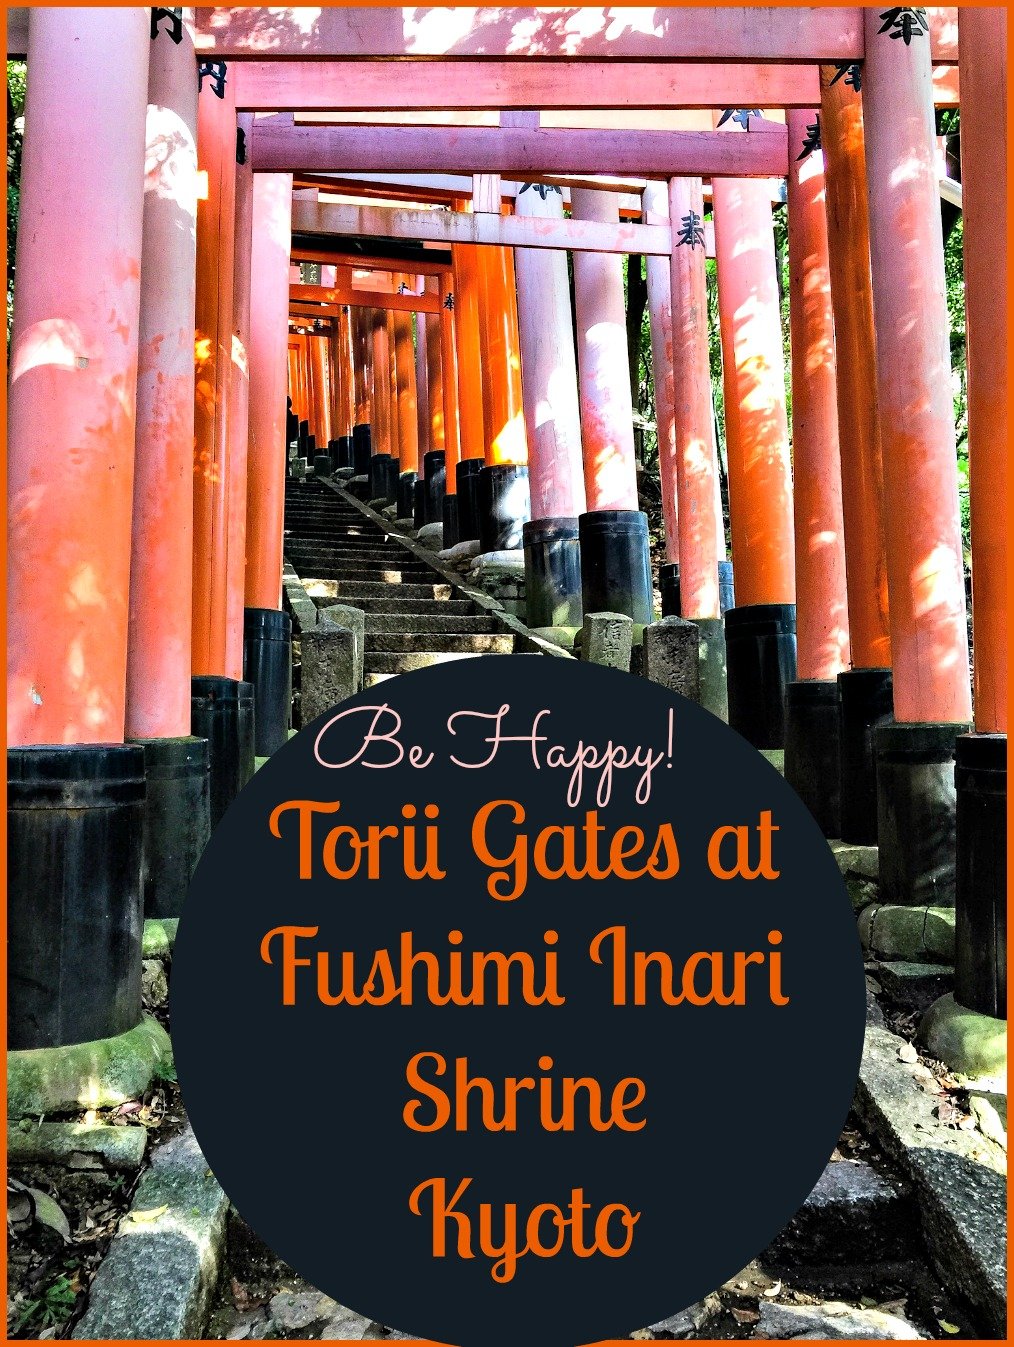 Be Happy beneath the bright orange Torii Gates Fushimi Inari Shrine Kyoto